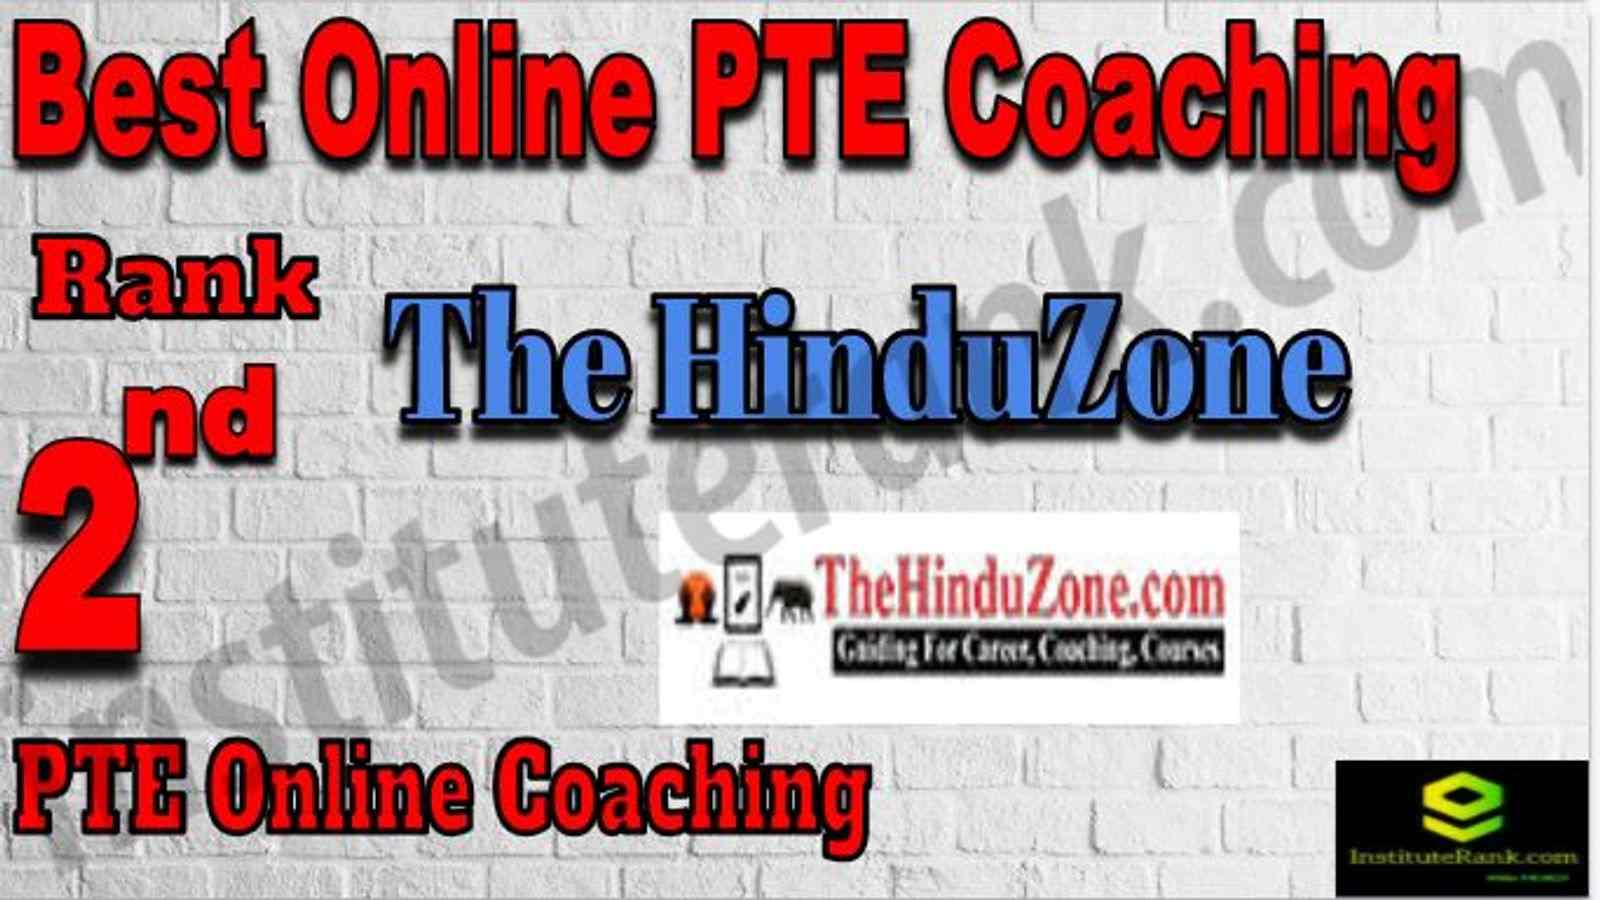 Rank 2 Best Online PTE Coaching